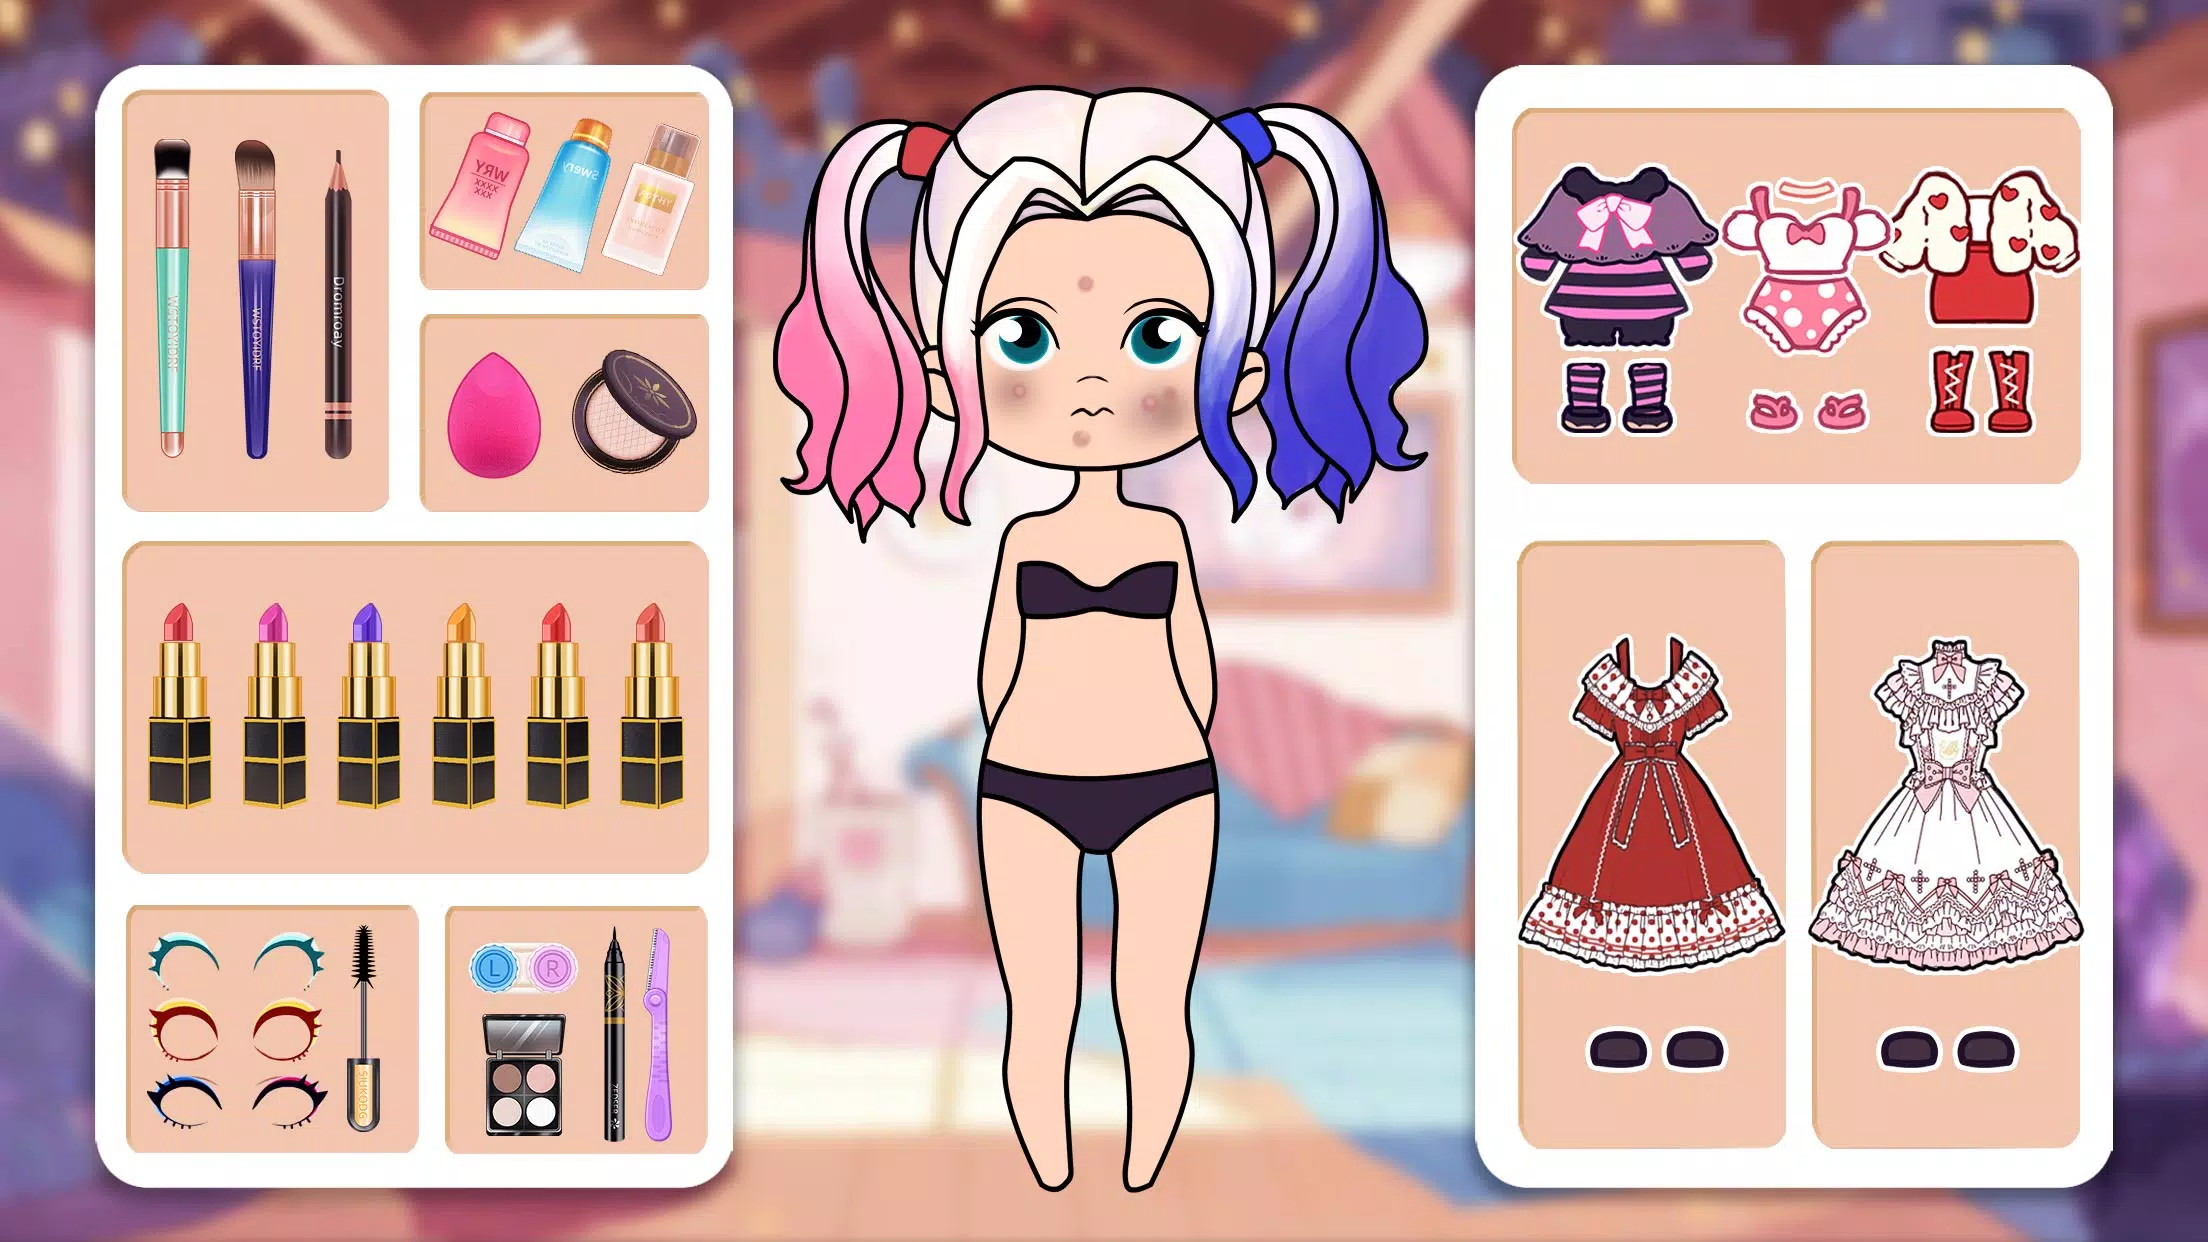 Juegos de vestir gratis para niñas en Android que te gustarán